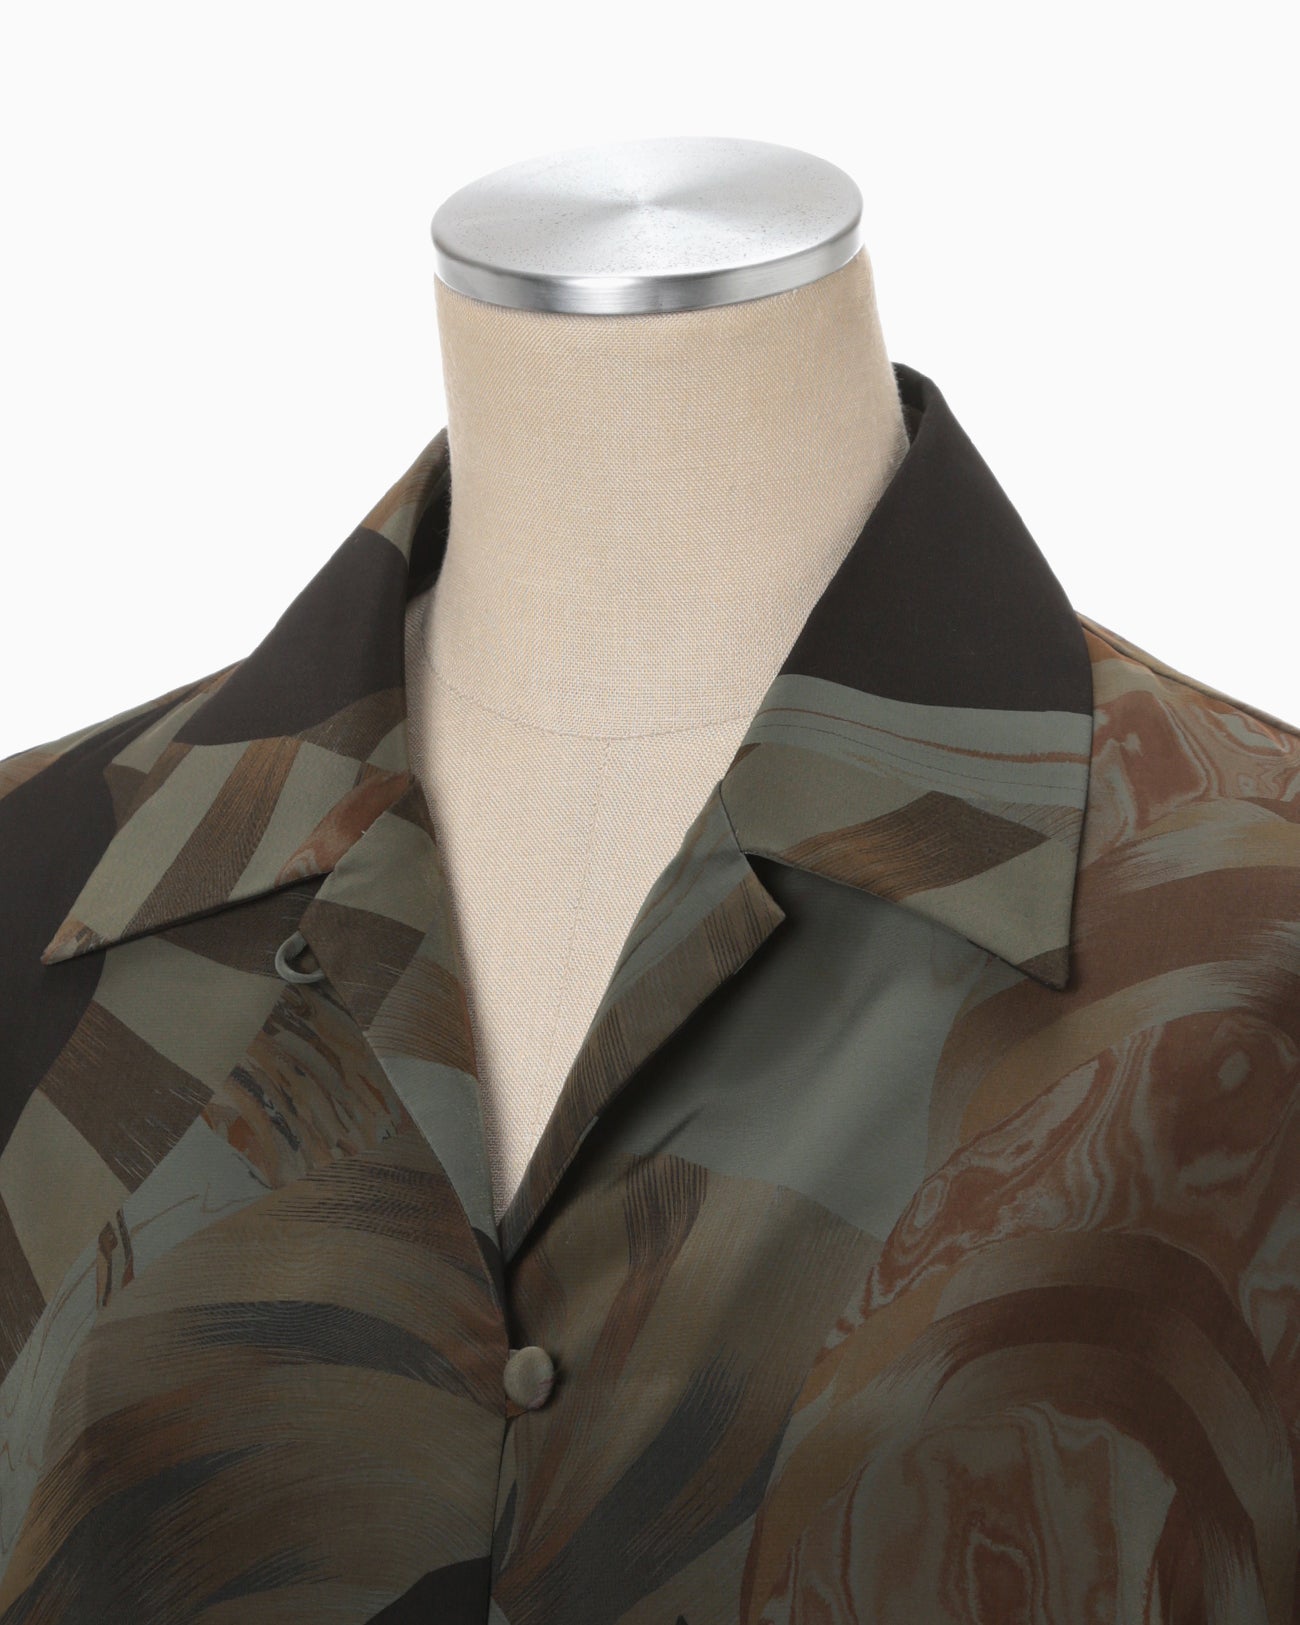 Marble Print Open‐Collar Shirt - khaki